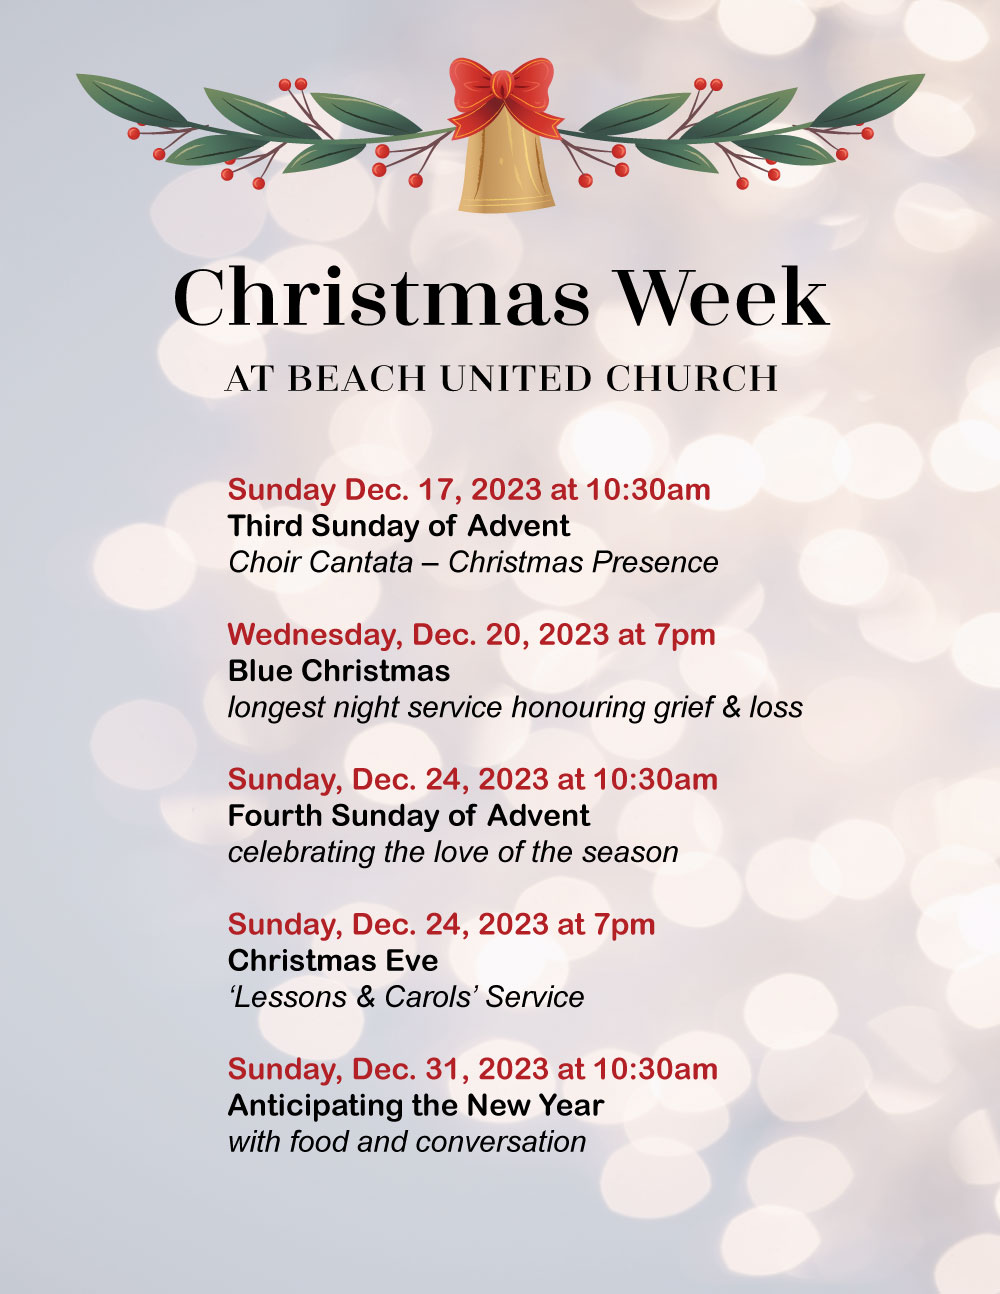 Christmas Week Services at Beach United Church